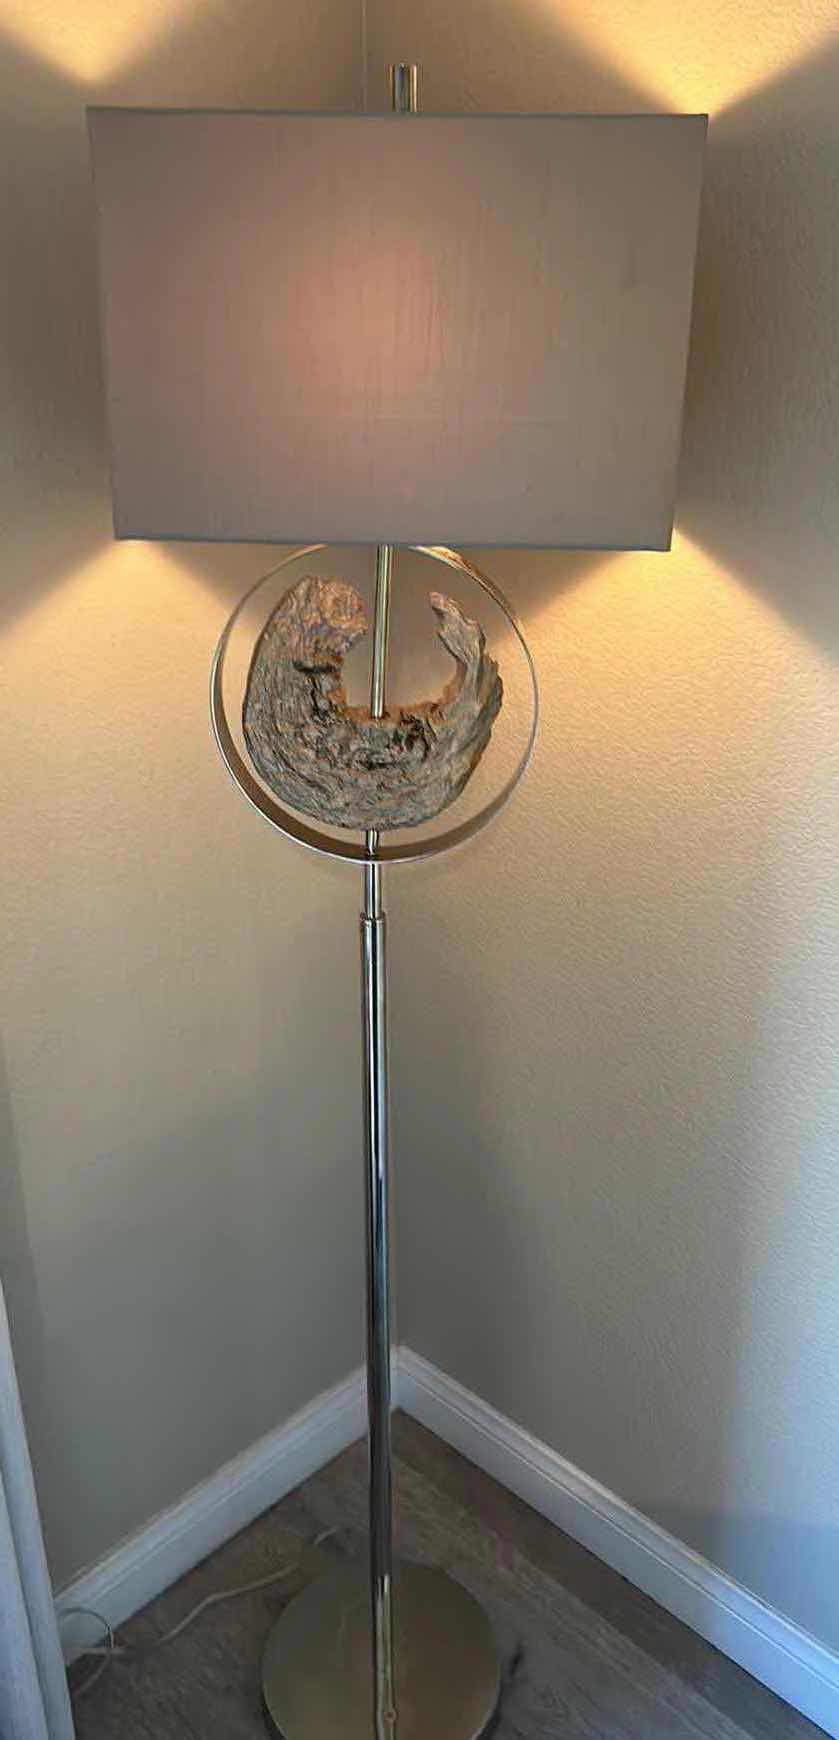 Photo 1 of H66” METAL FLOOR LAMP WITH WOOD SCULPTURE IN CIRCULAR DESIGN